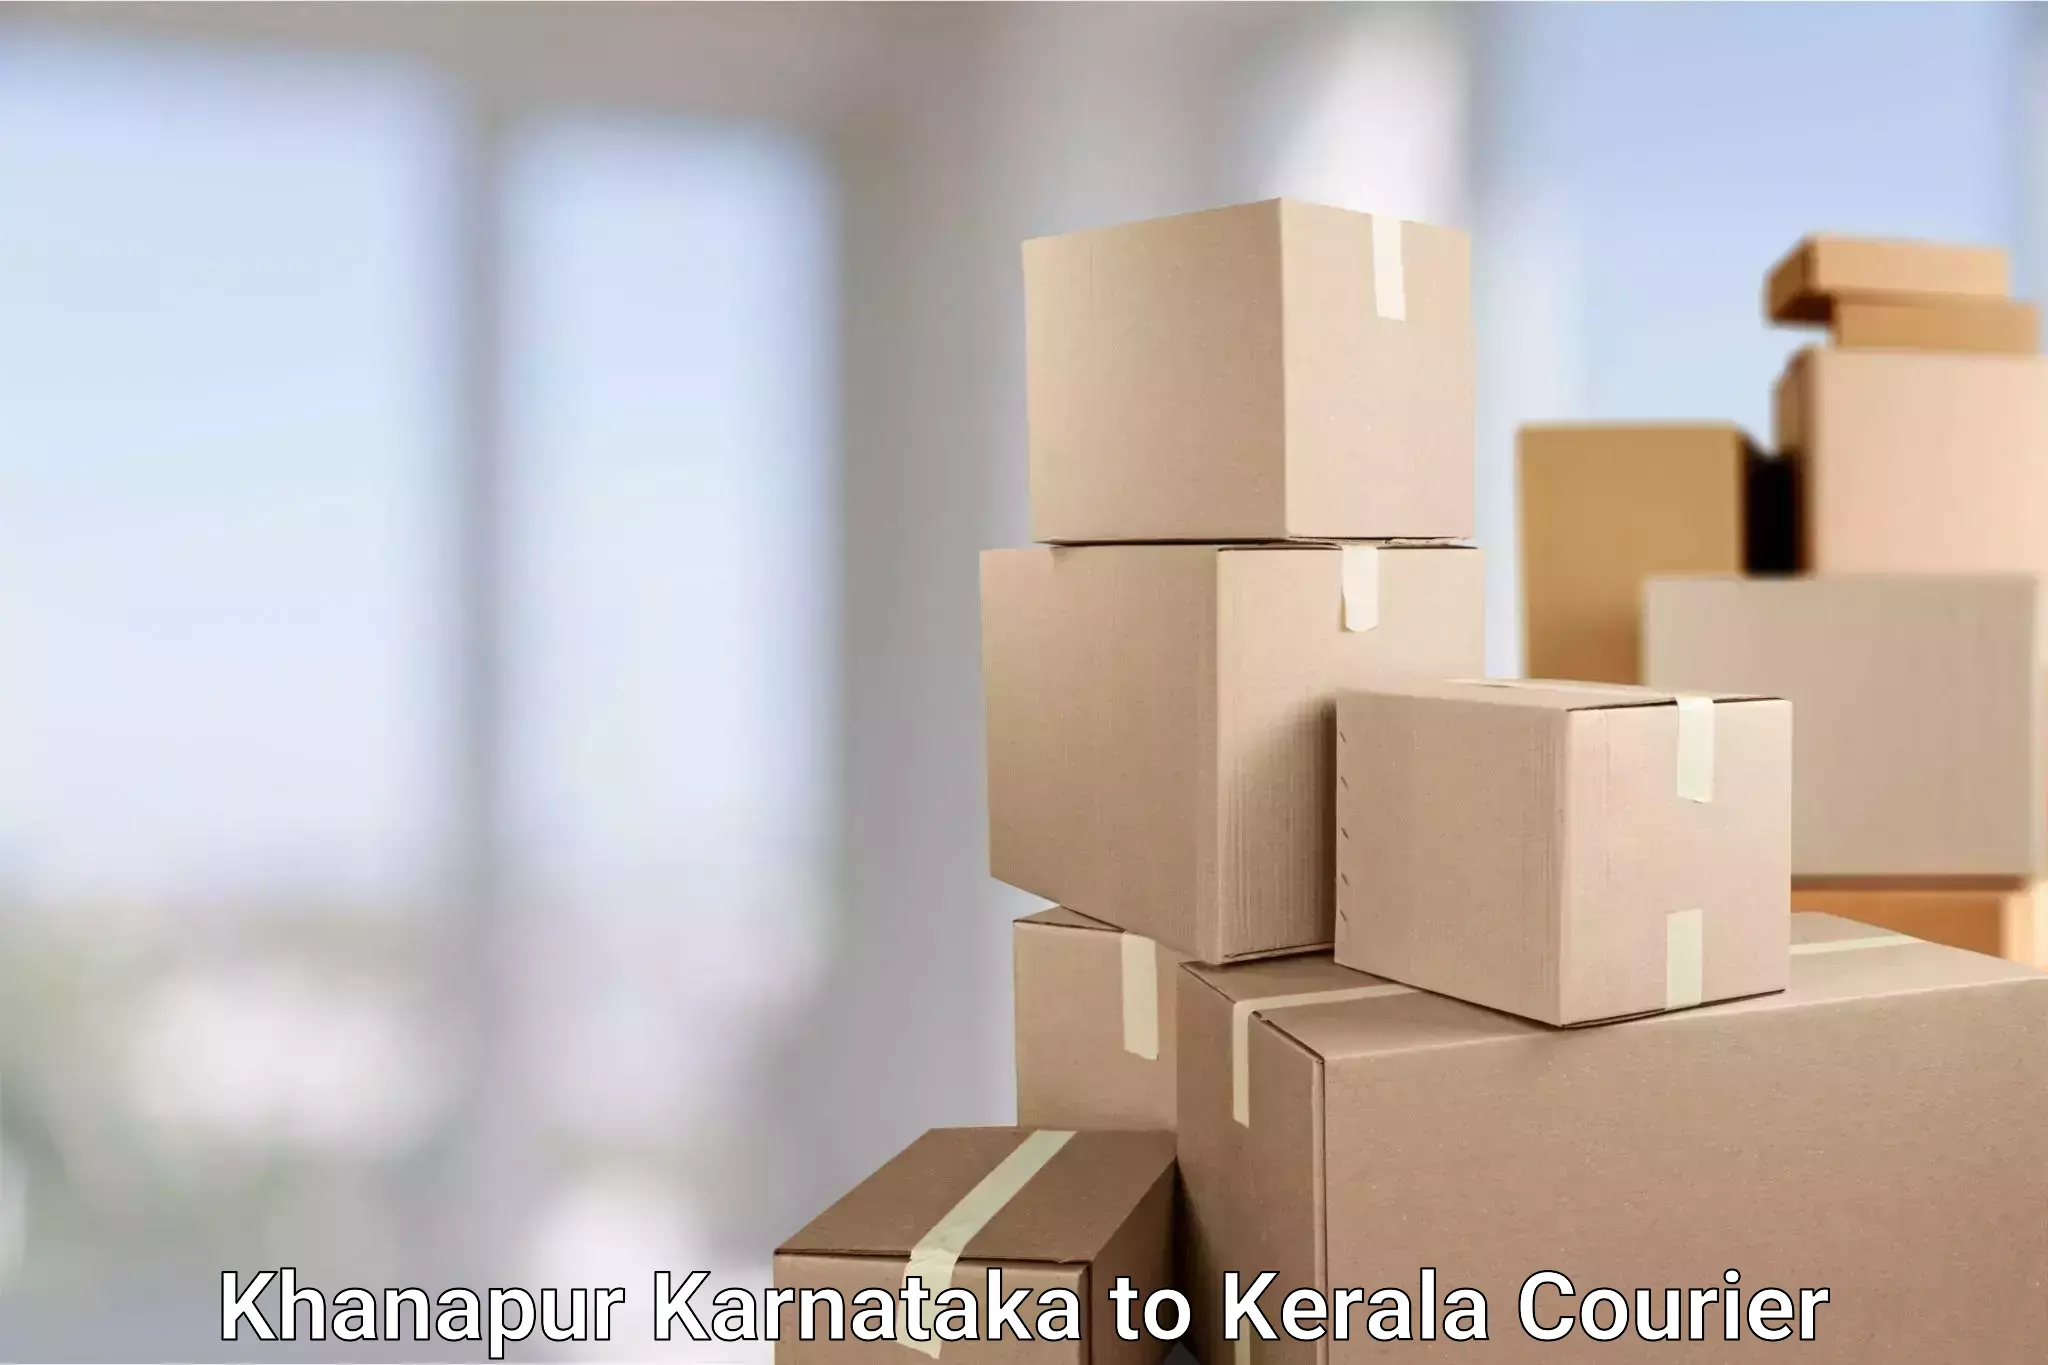 Tailored freight services Khanapur Karnataka to Cochin Port Kochi